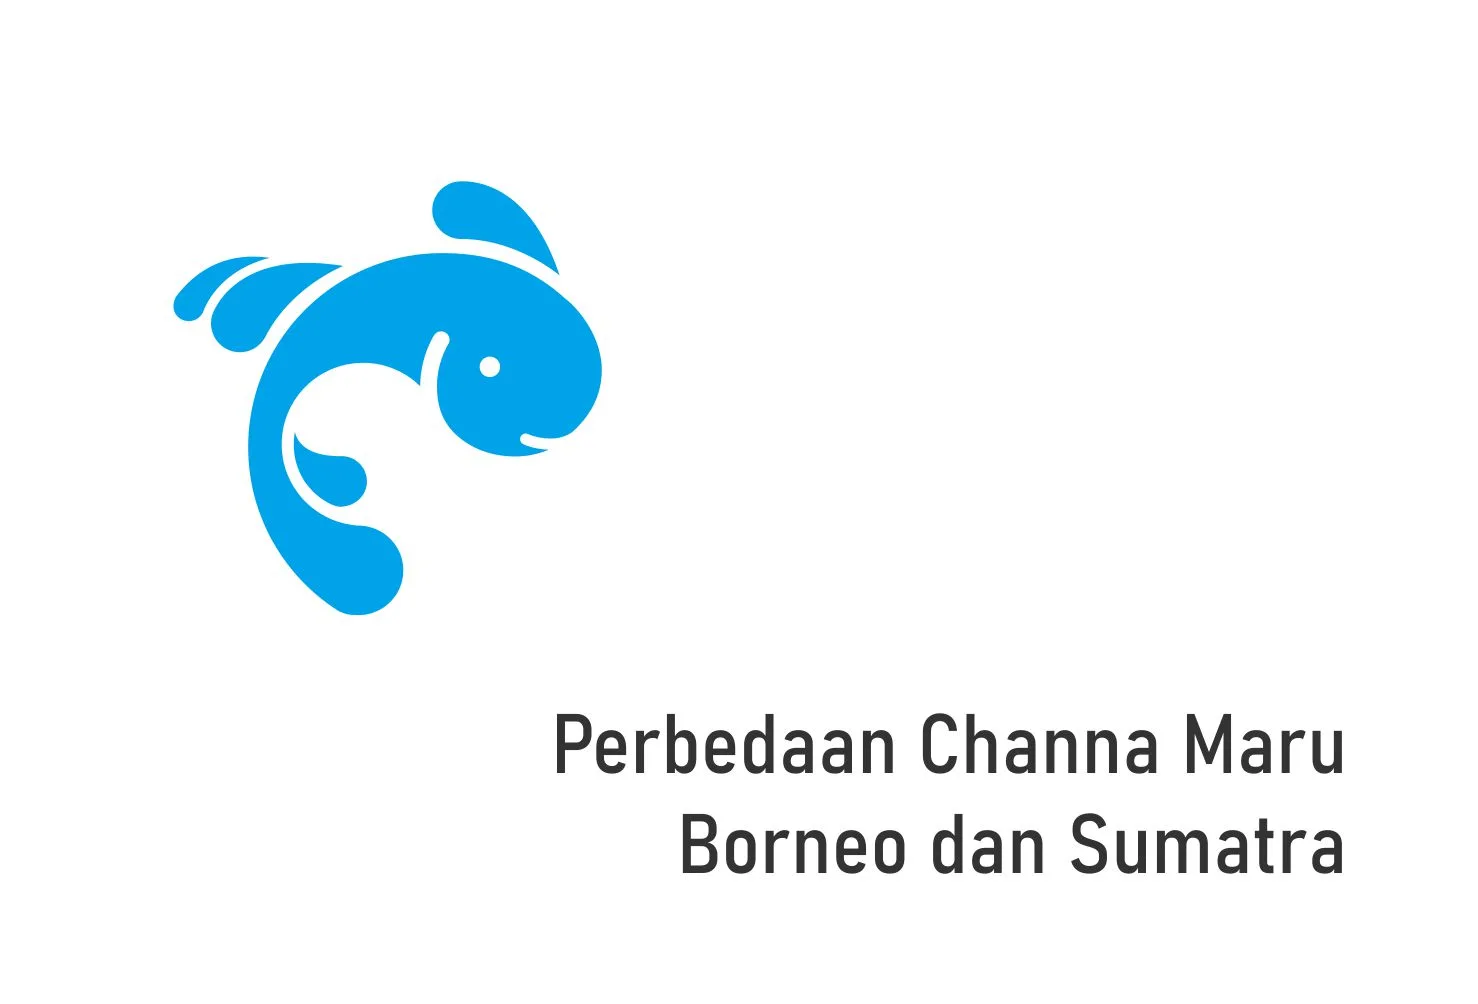 Perbedaan Channa Maru Borneo dan Sumatra